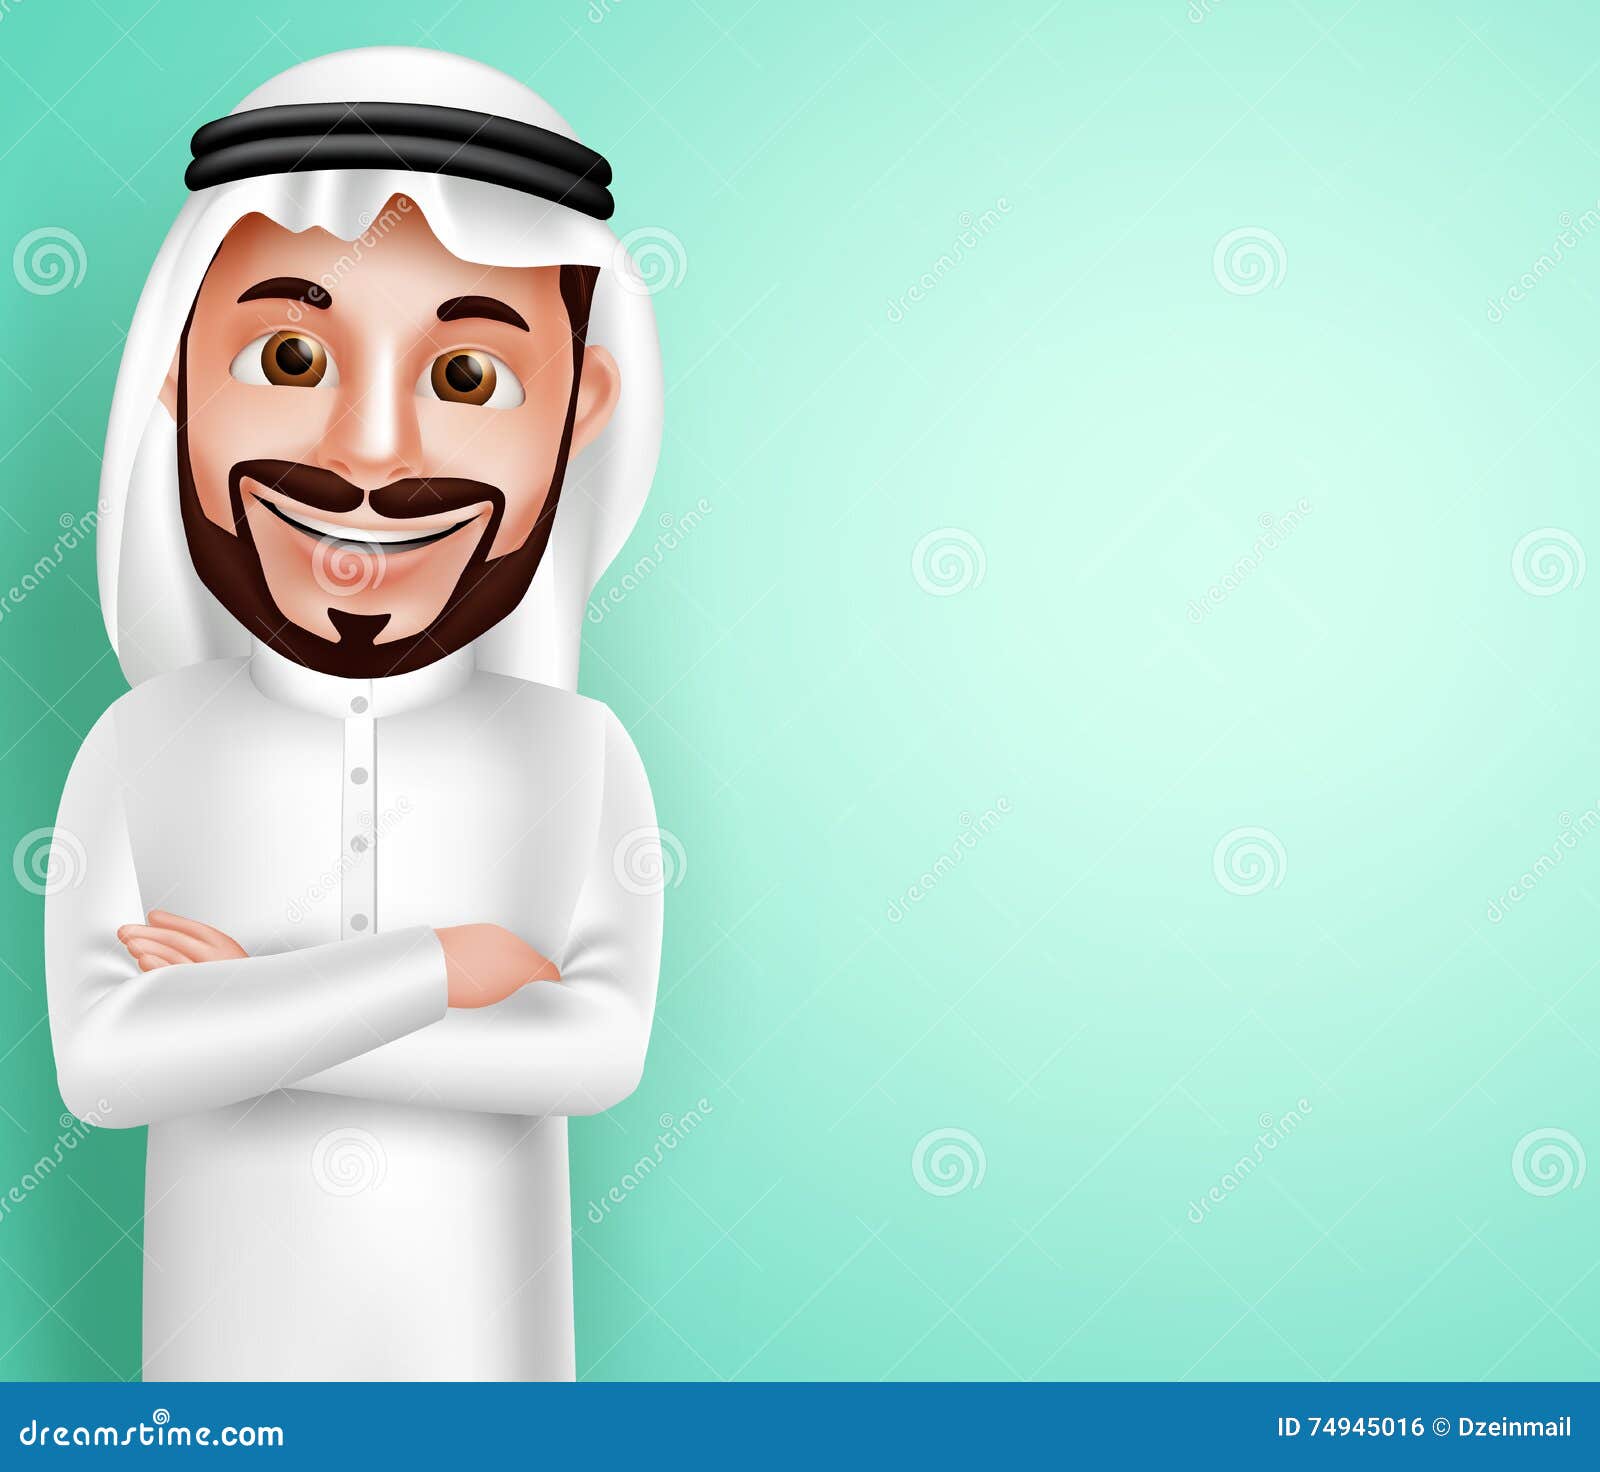 saudi arab man  character wearing thobe happy posing with blank space